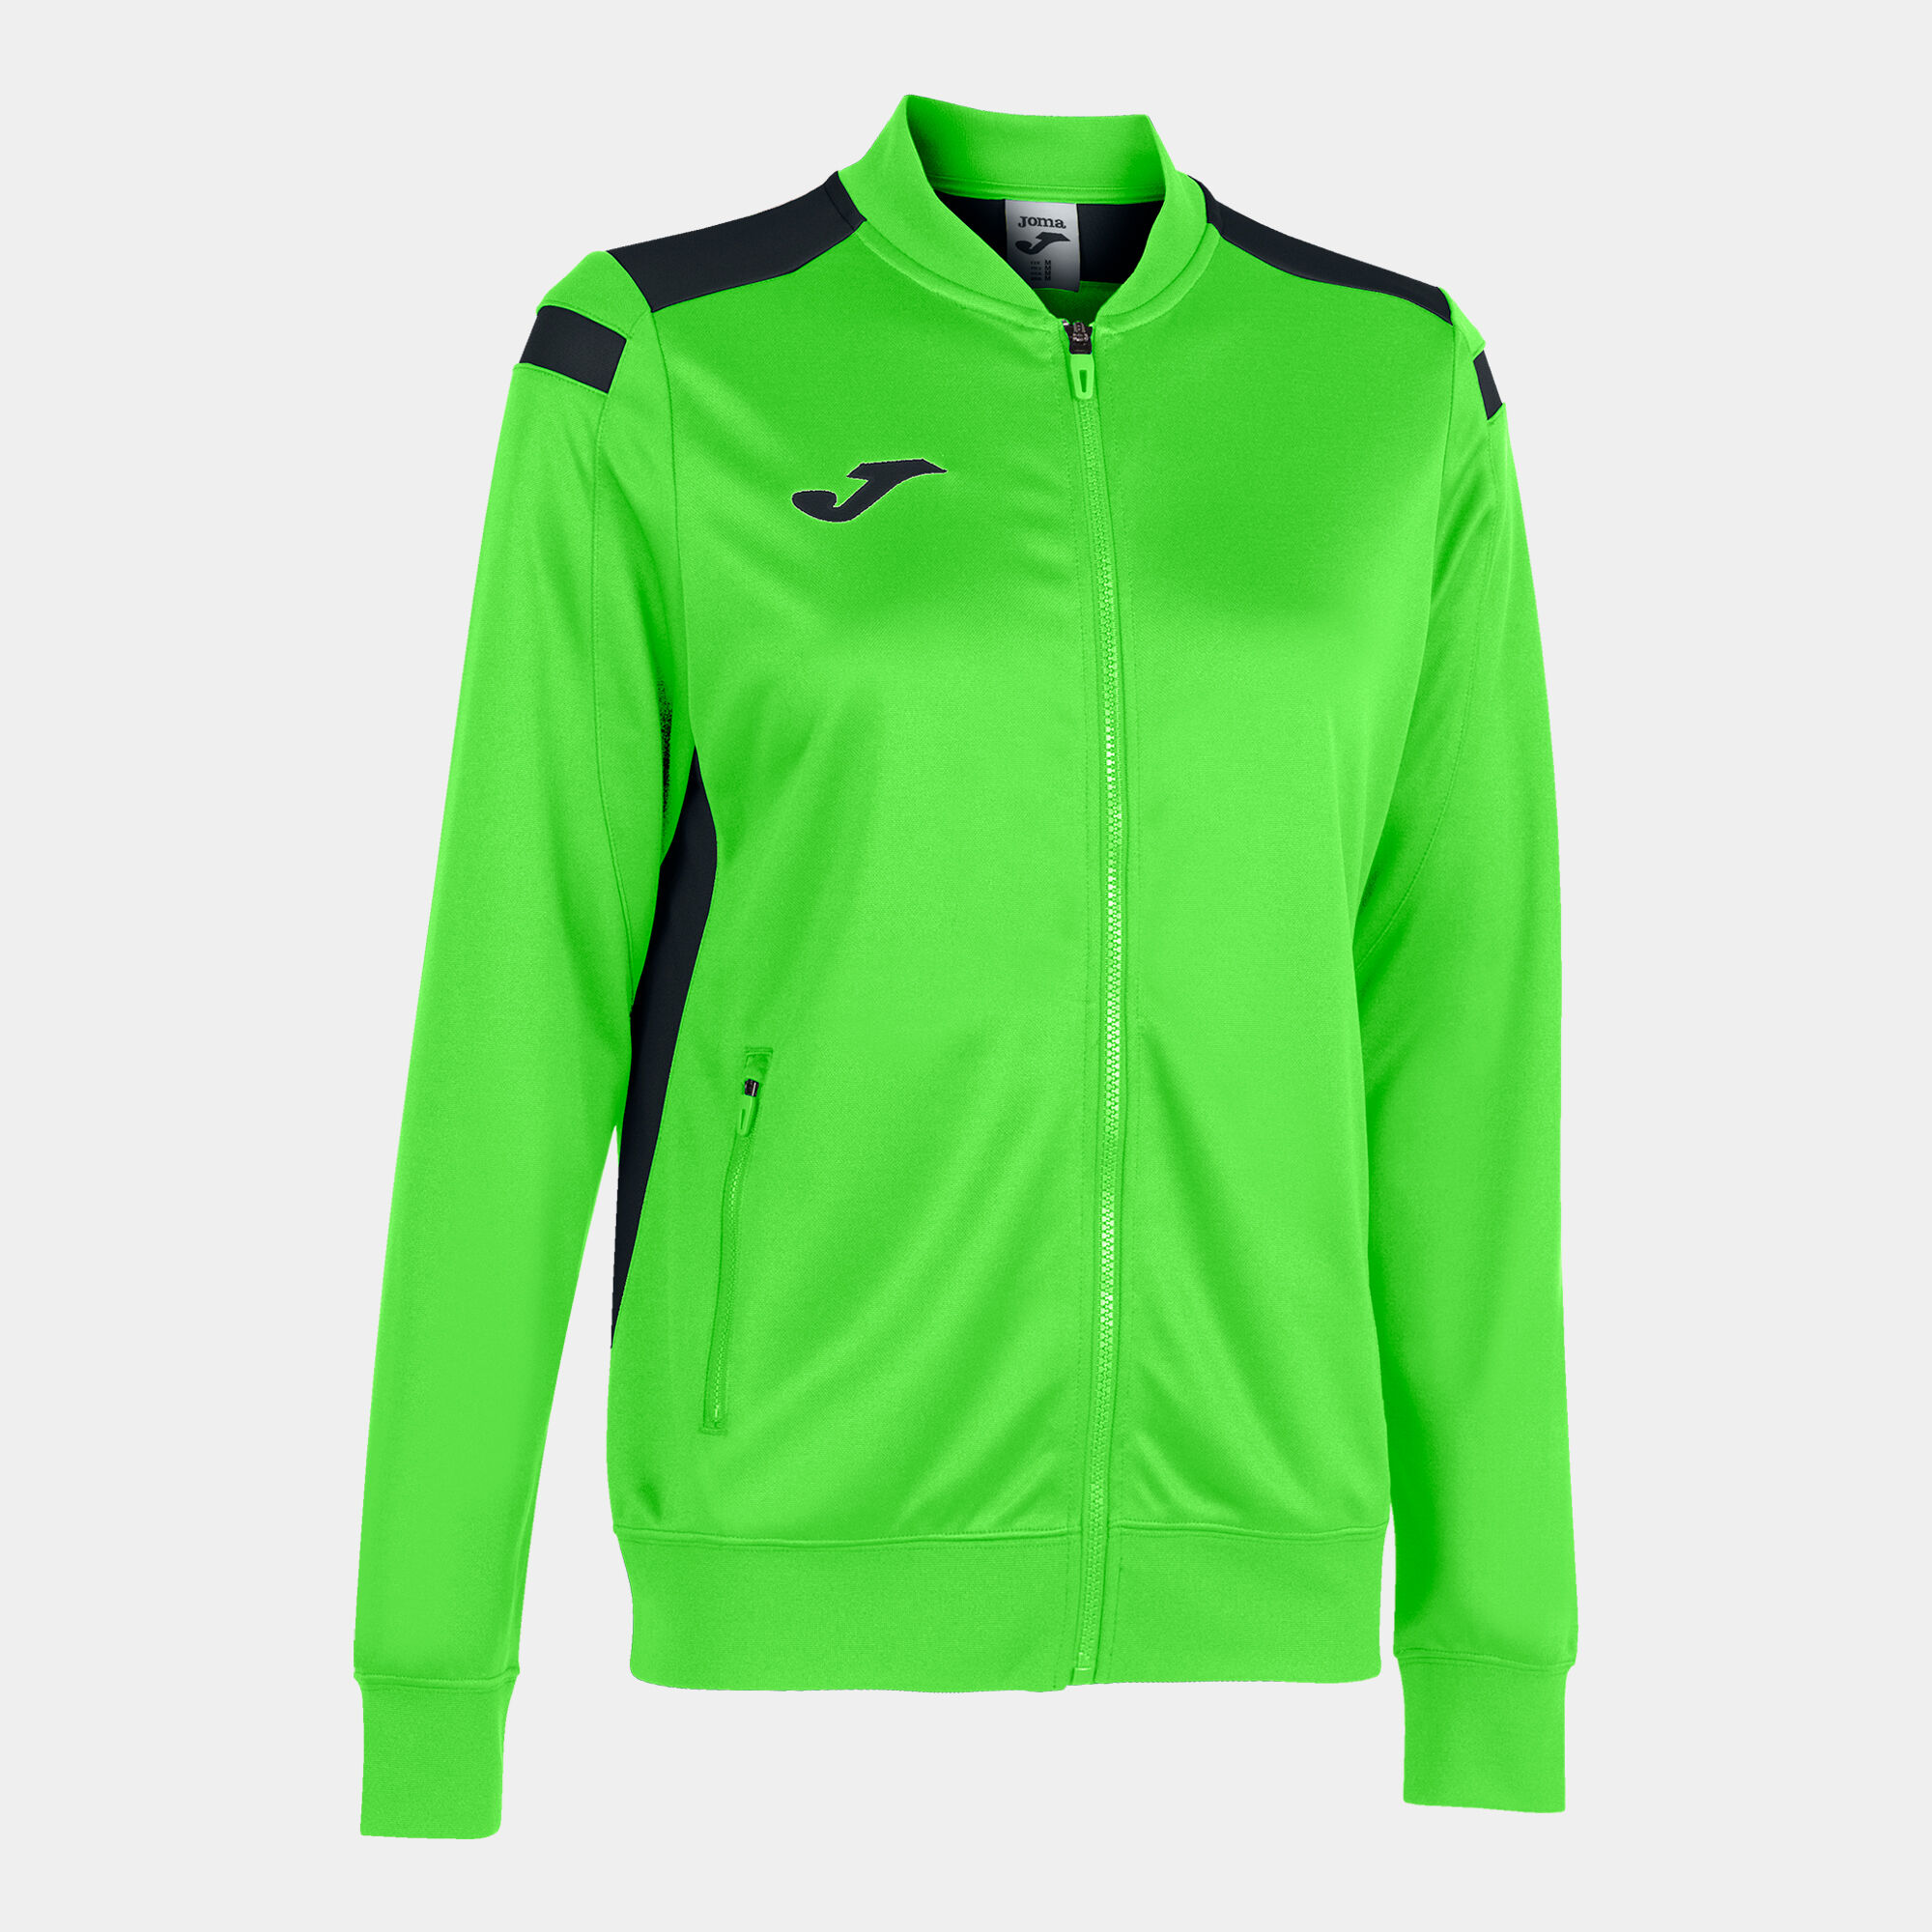 Bluza rozpinana kobiety Championship VI fluorescencyjny zielony czarny